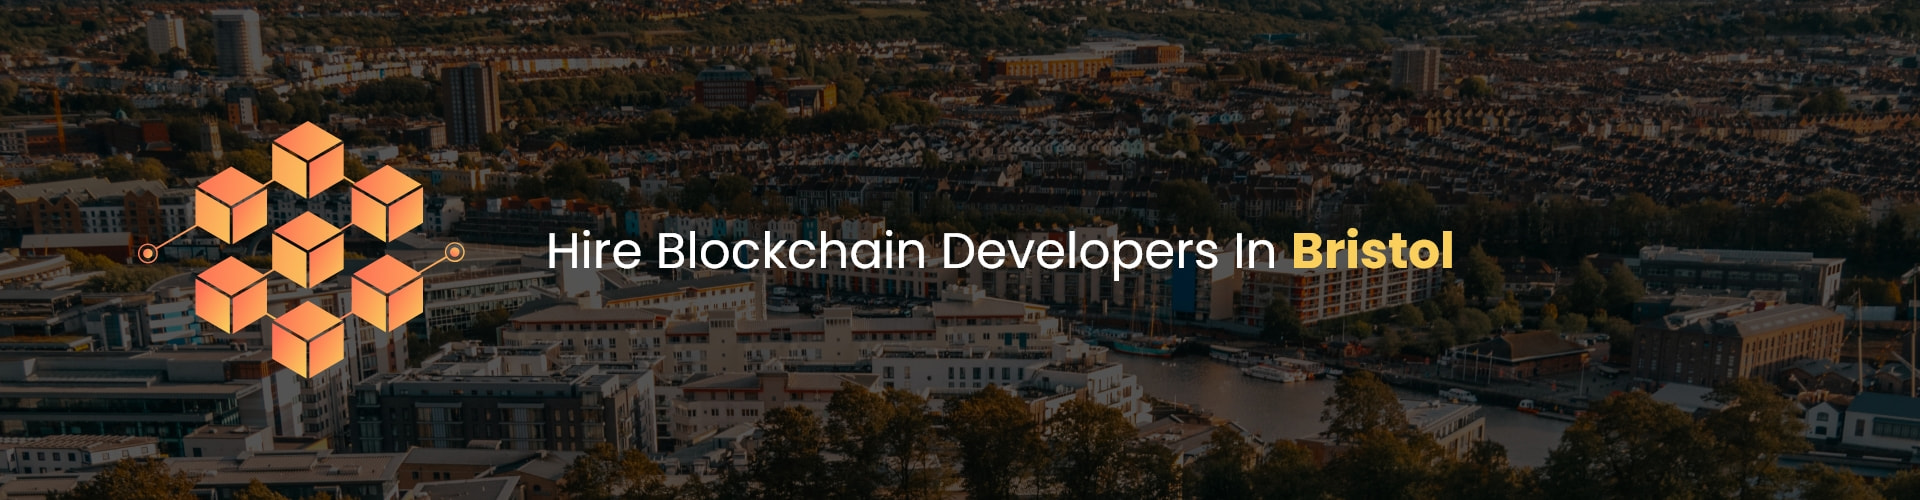 hire blockchain developers in bristol